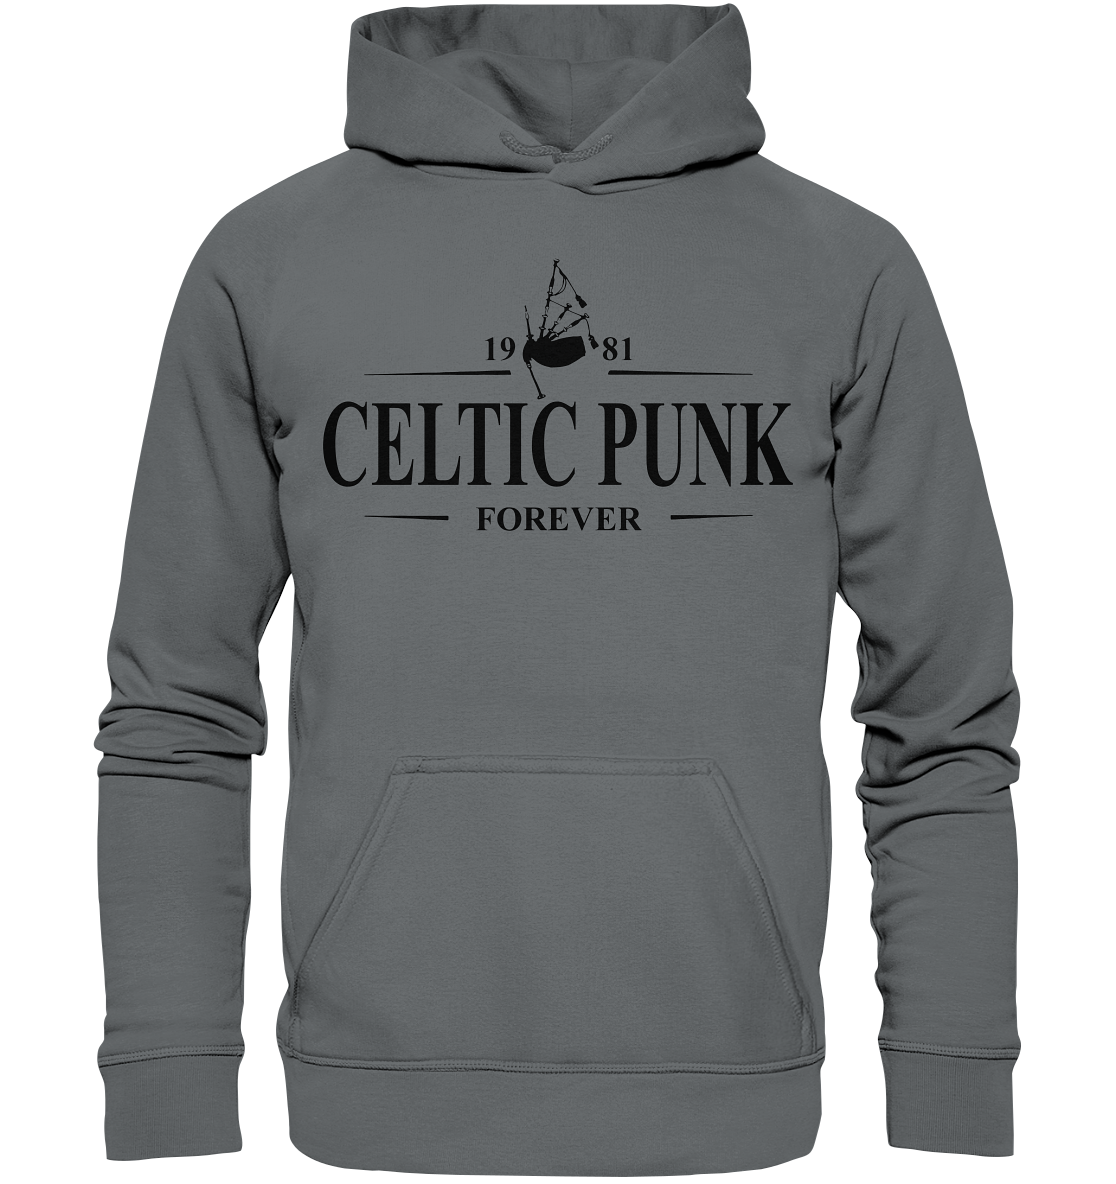 Celtic Punk "Forever" - Basic Unisex Hoodie